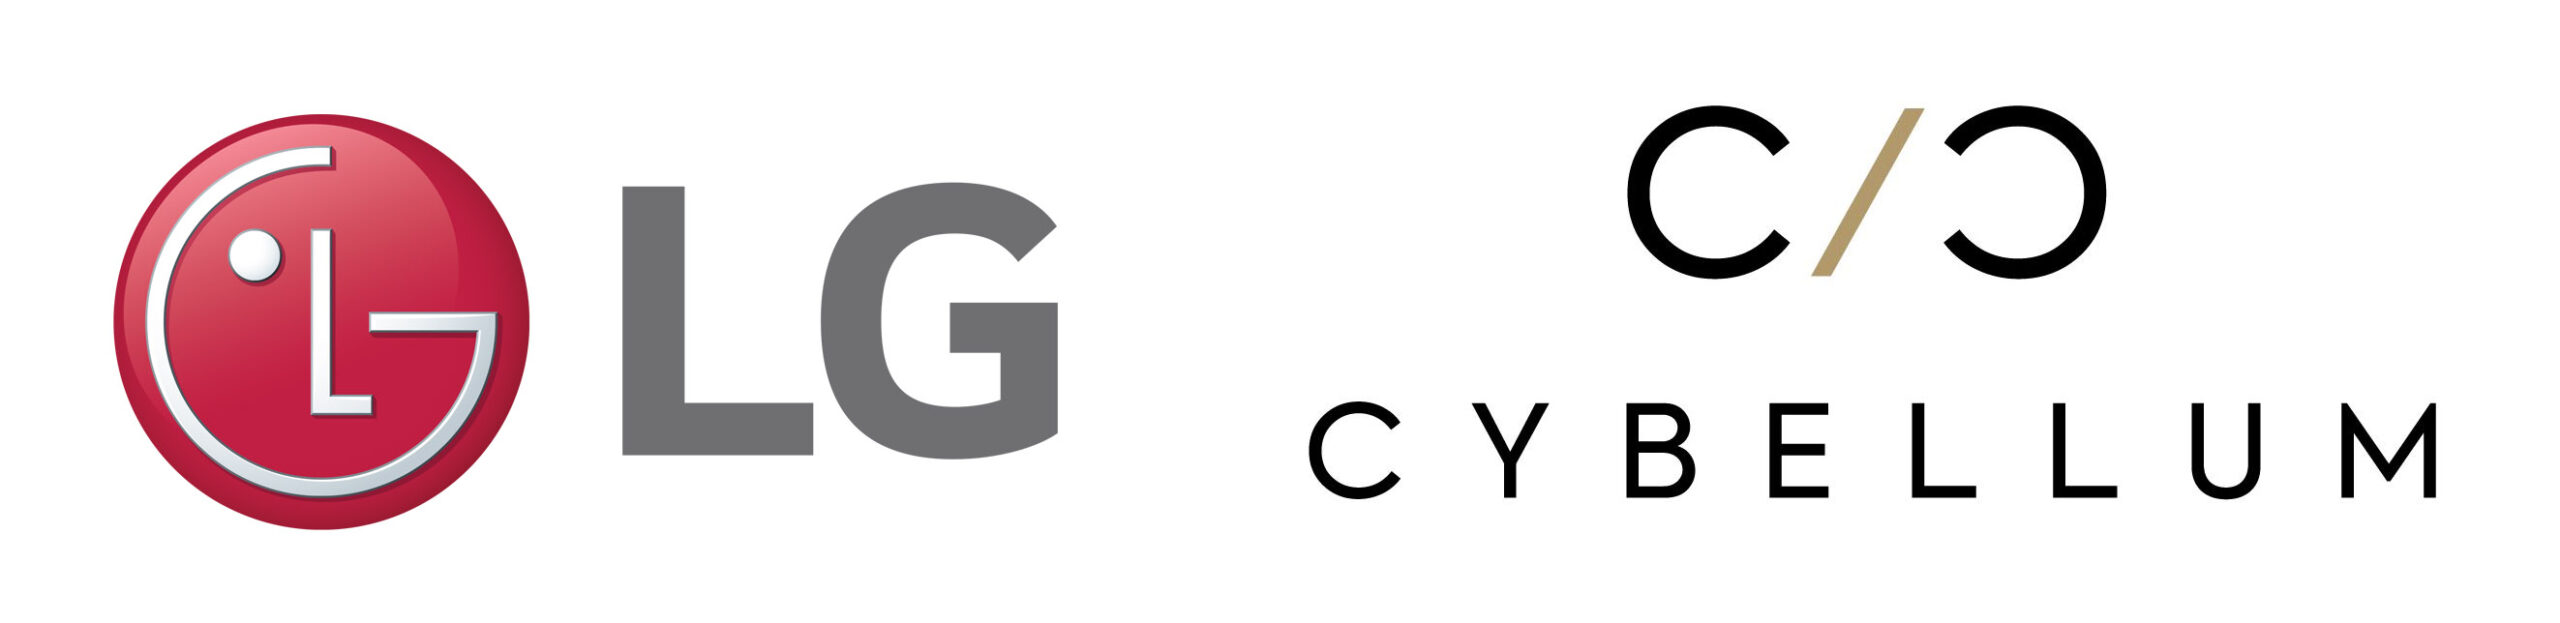 LG logo and Cybellum logo